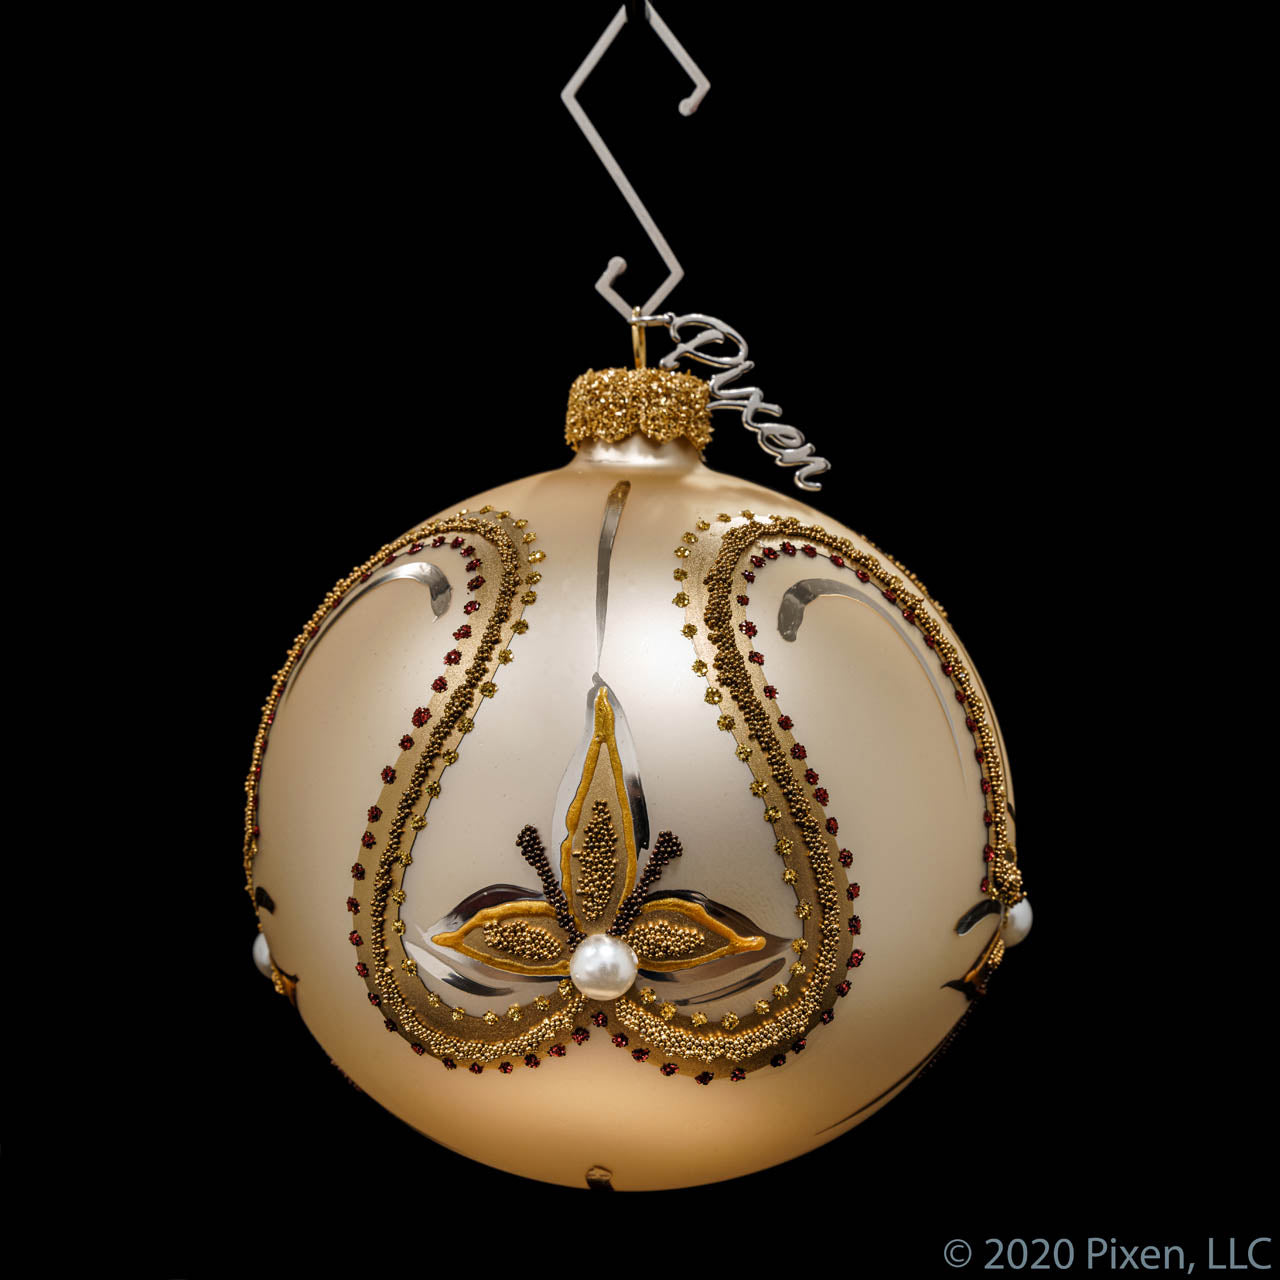 Conundrum Ball Christmas ornament by Pixen